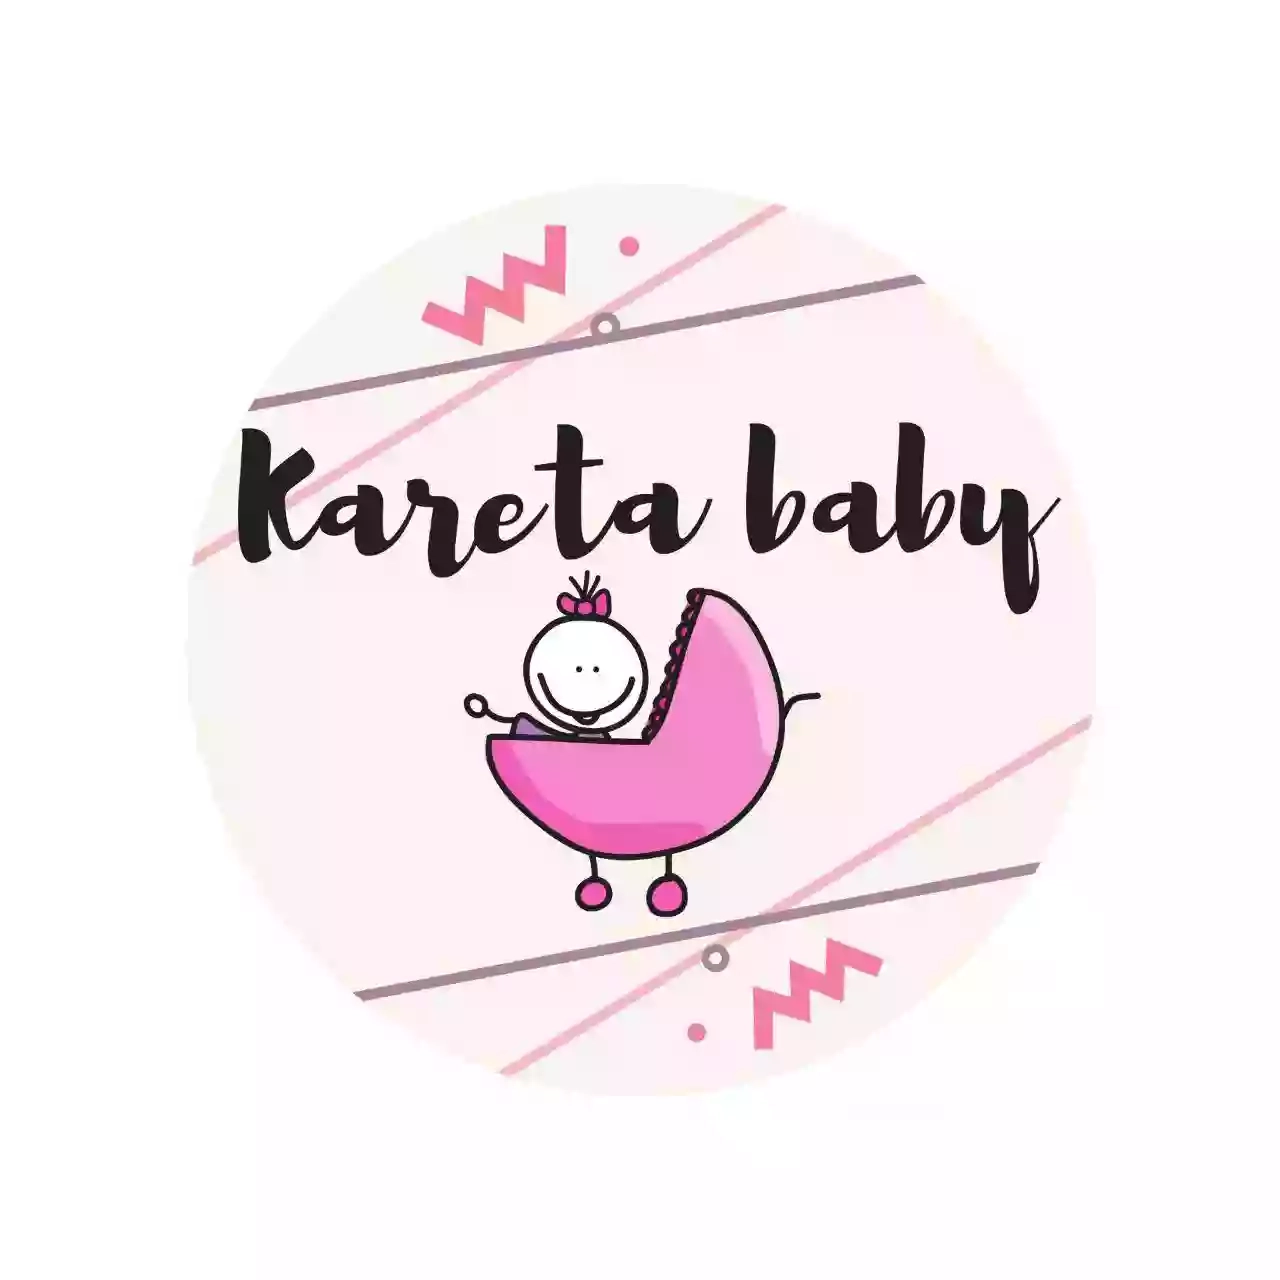 Kareta-baby - детские коляски, автокресла, игрушки